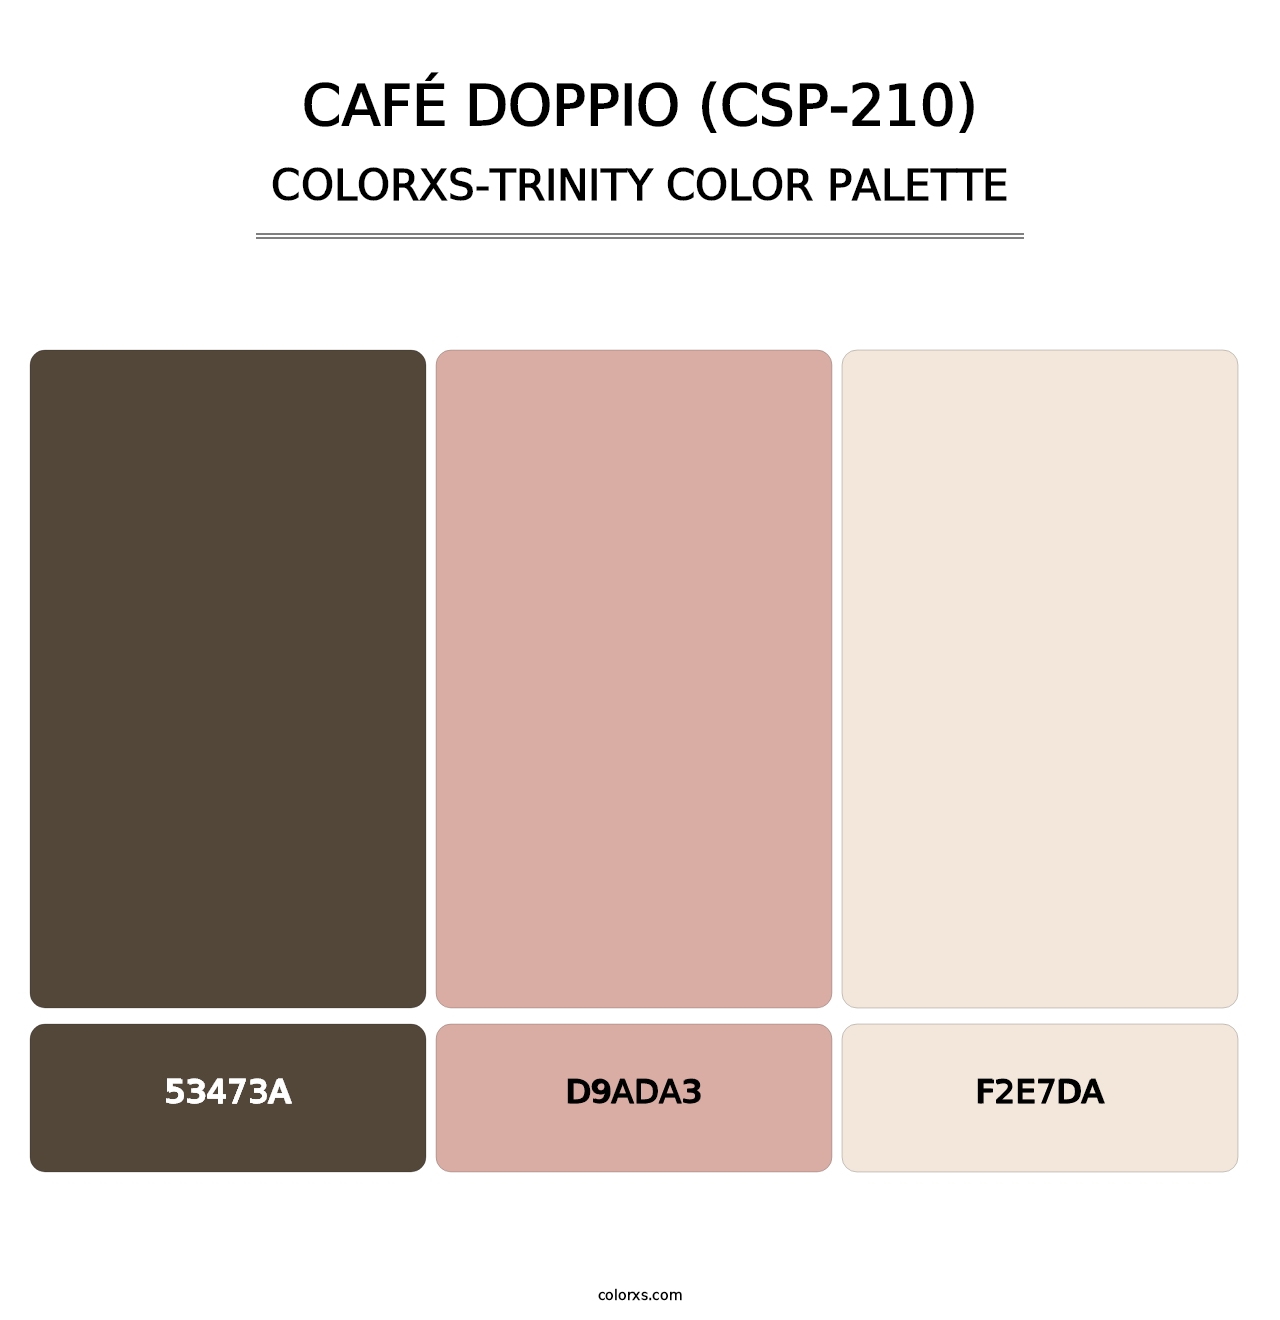 Café Doppio (CSP-210) - Colorxs Trinity Palette